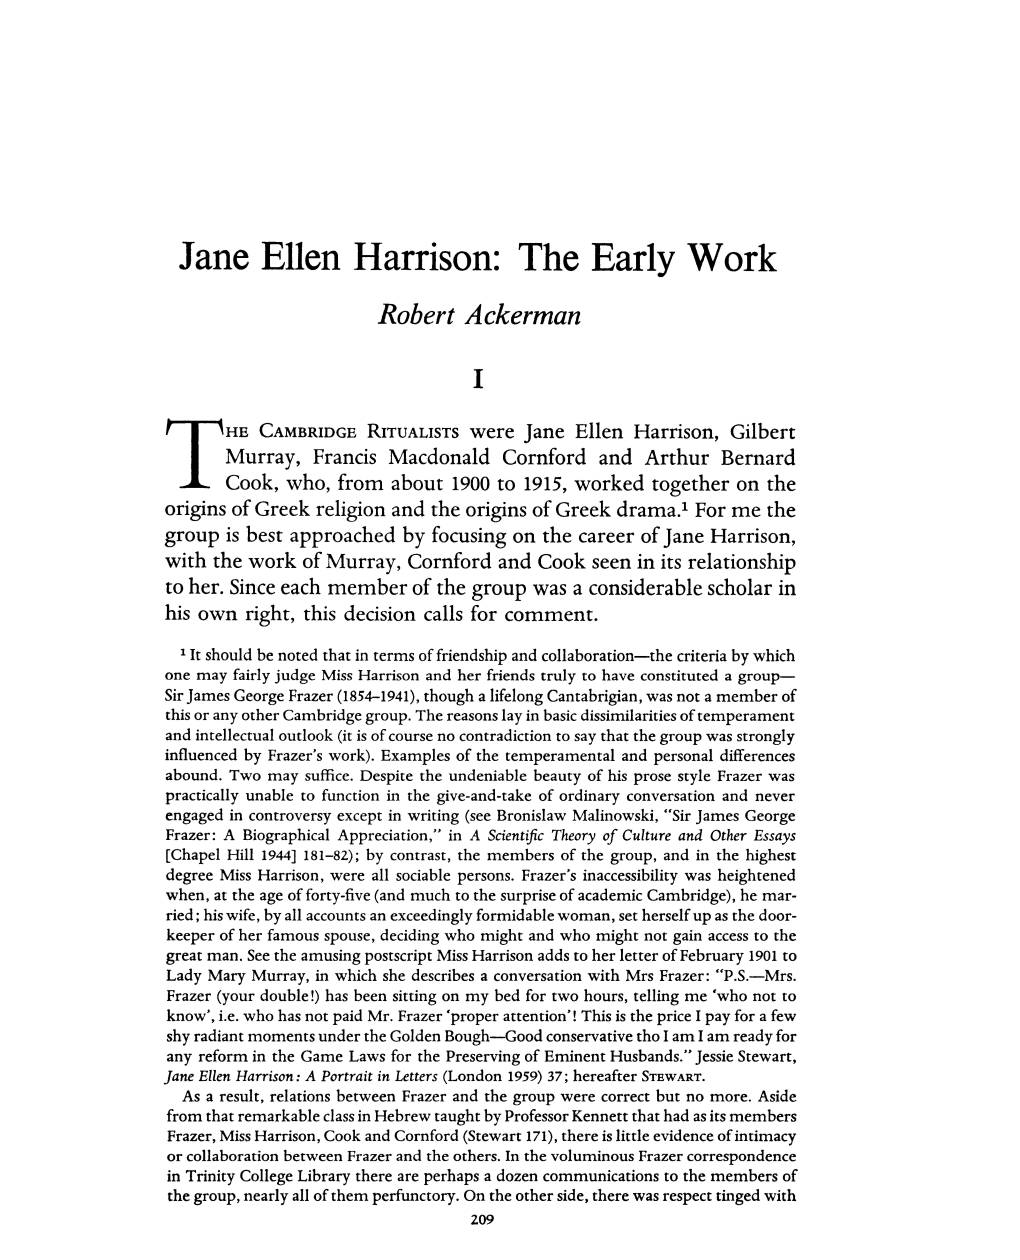 Jane Ellen Harrison: the Early Work Ackerman, Robert Greek, Roman and Byzantine Studies; Summer 1972; 13, 2; Proquest Pg